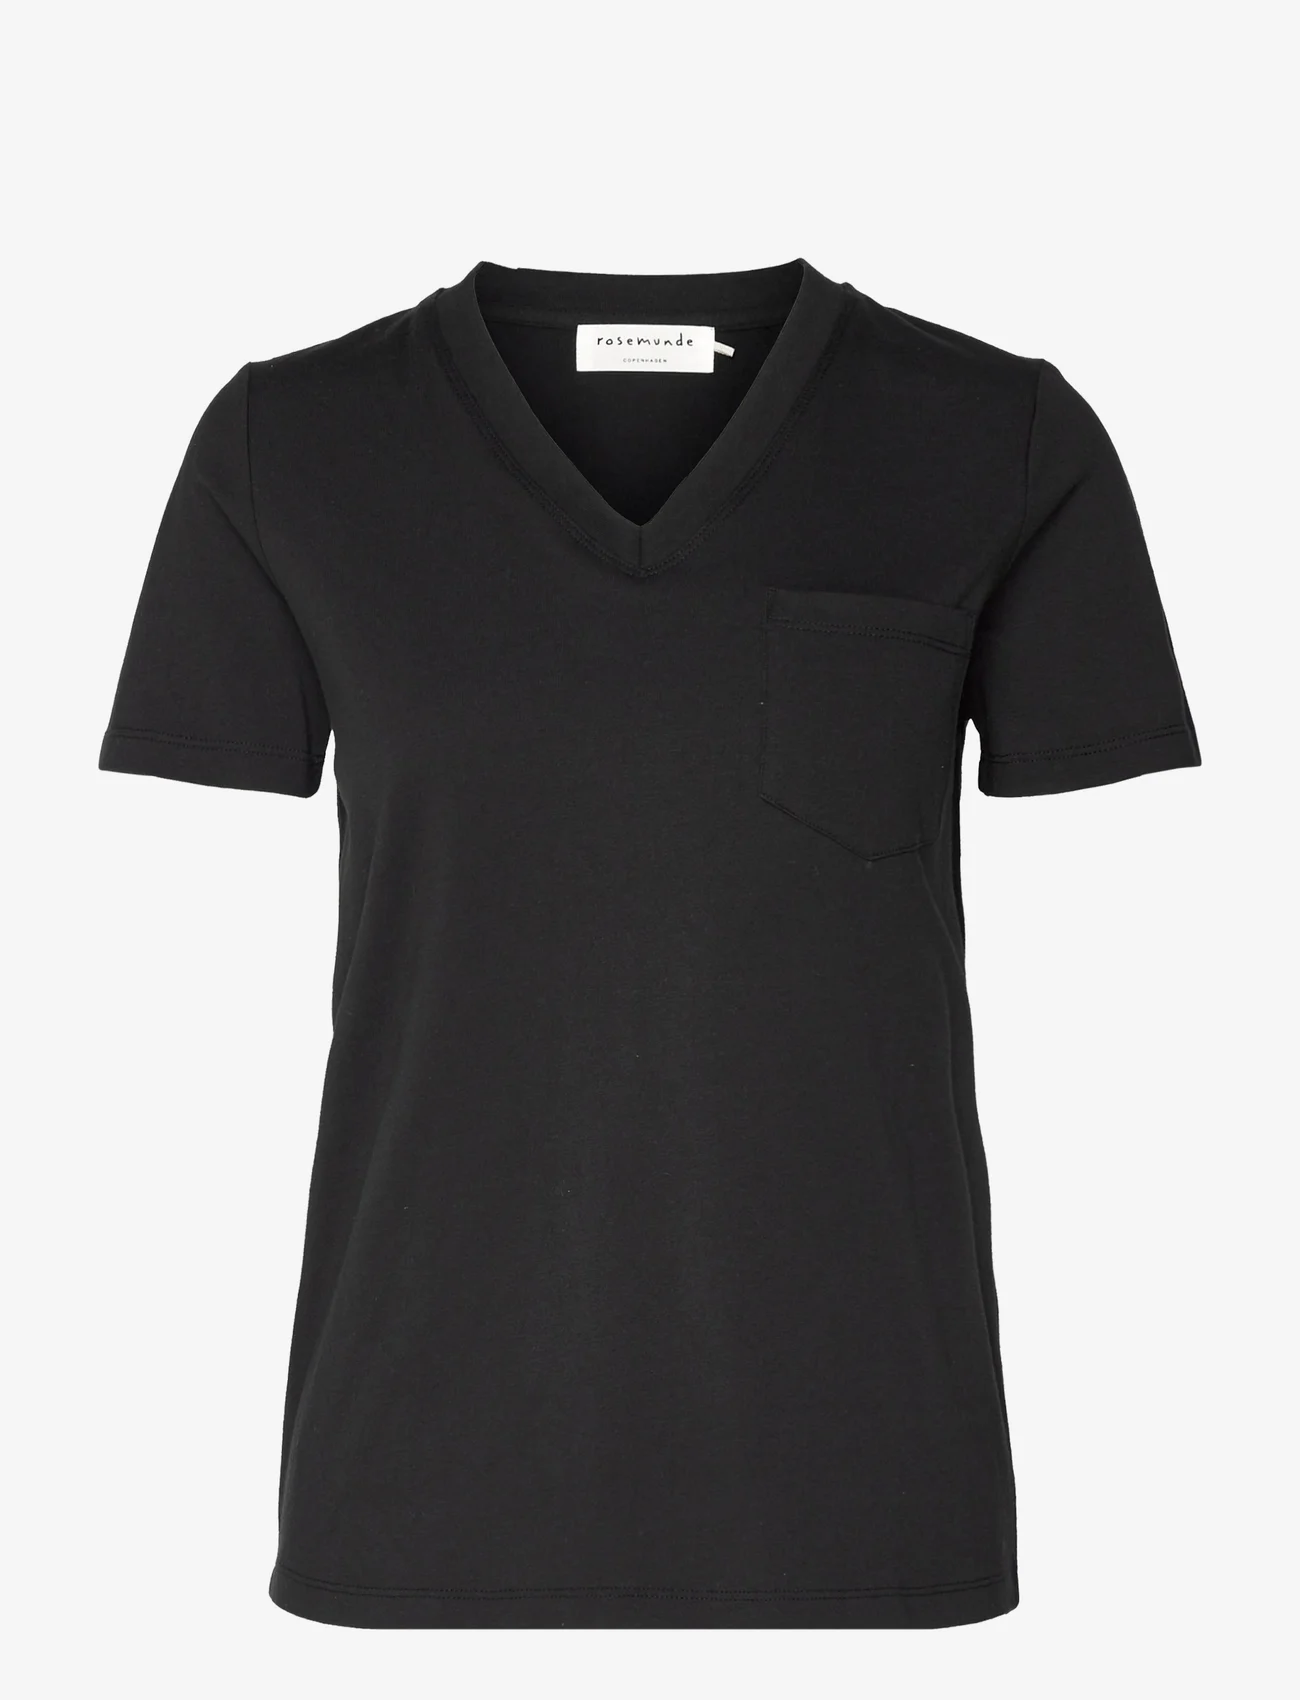 Rosemunde - Organic t-shirt - zemākās cenas - black - 0